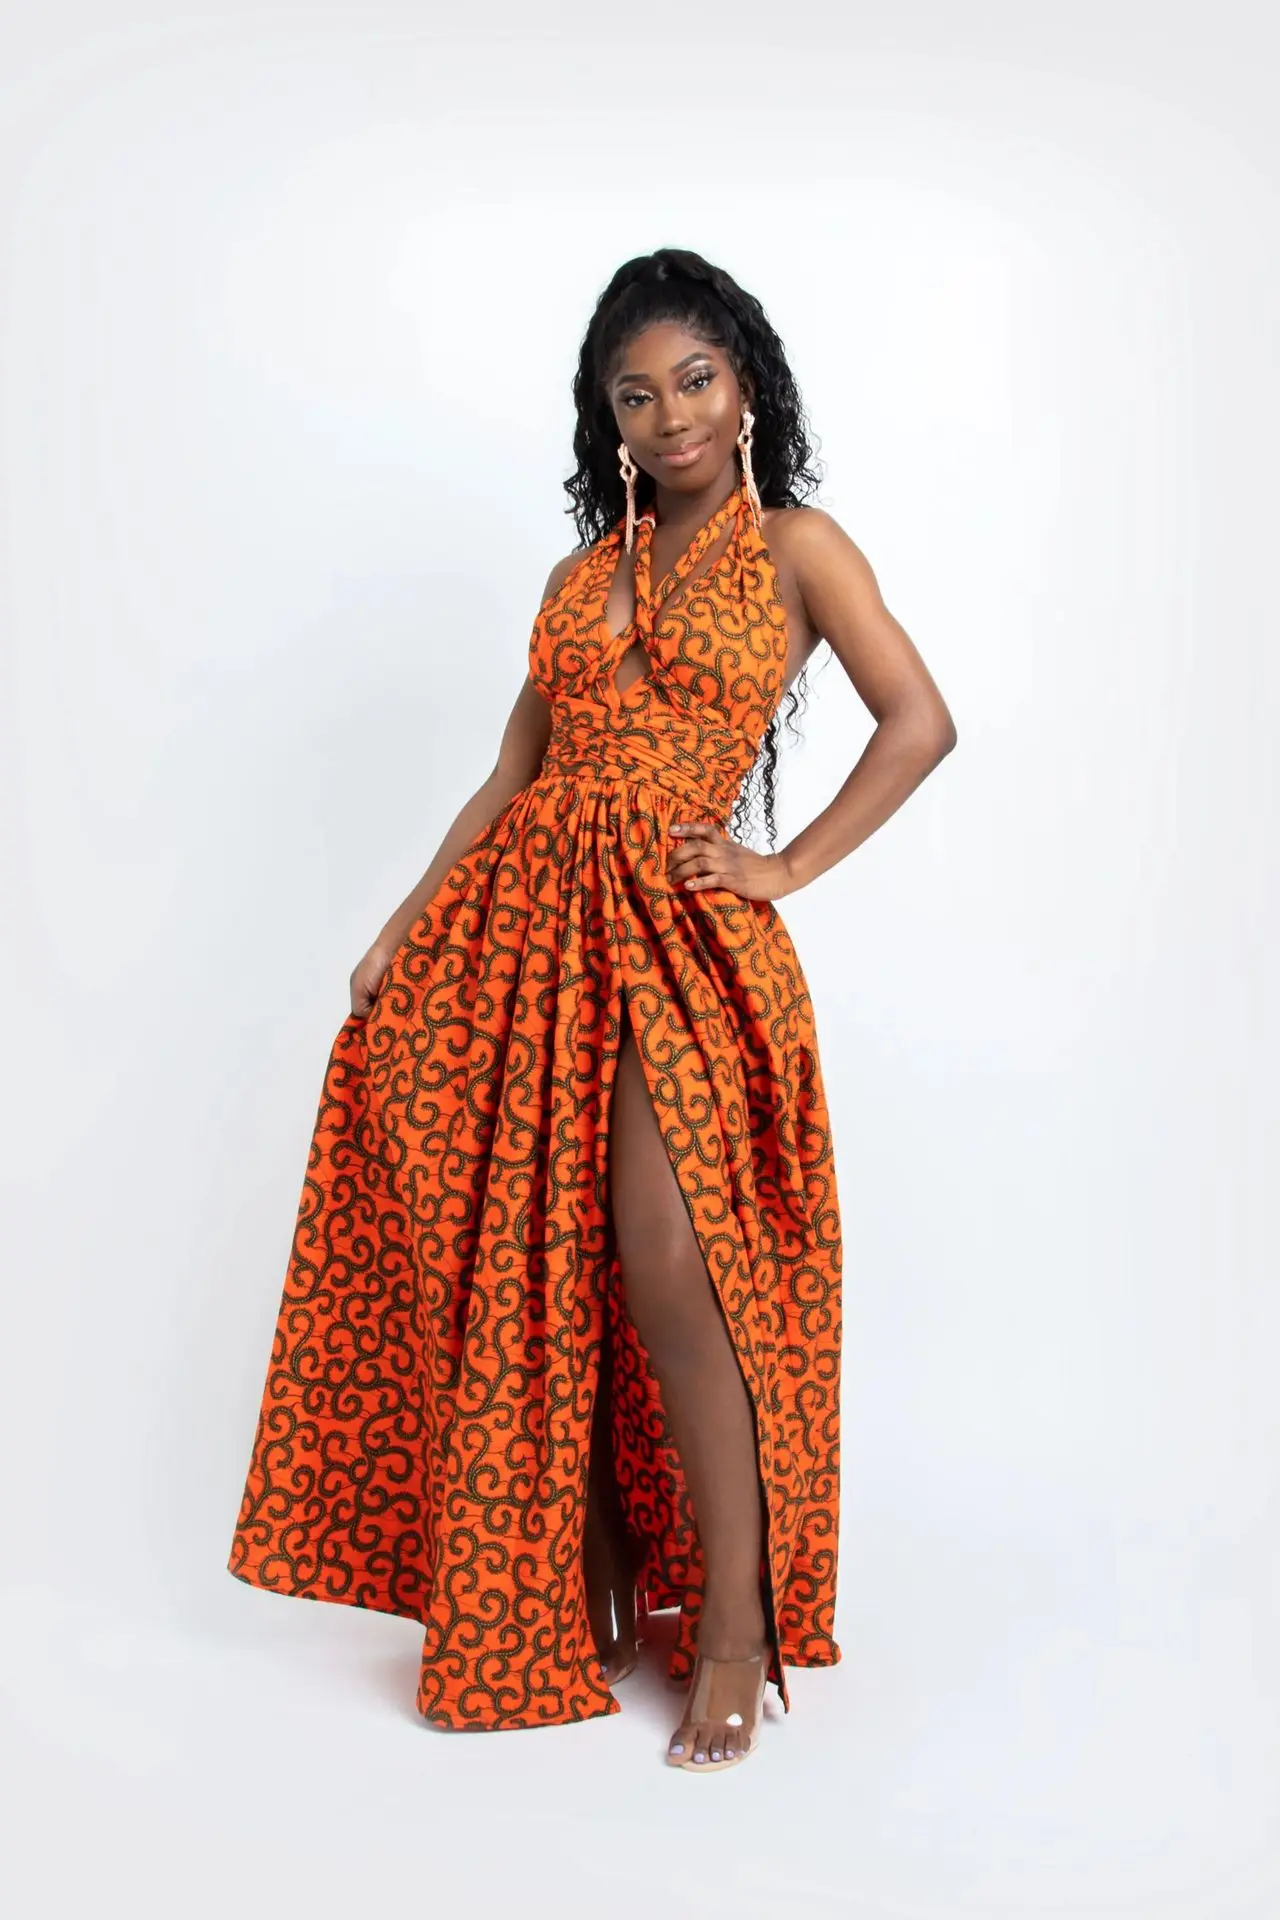 Longue robe africaine wax pour femmes 276